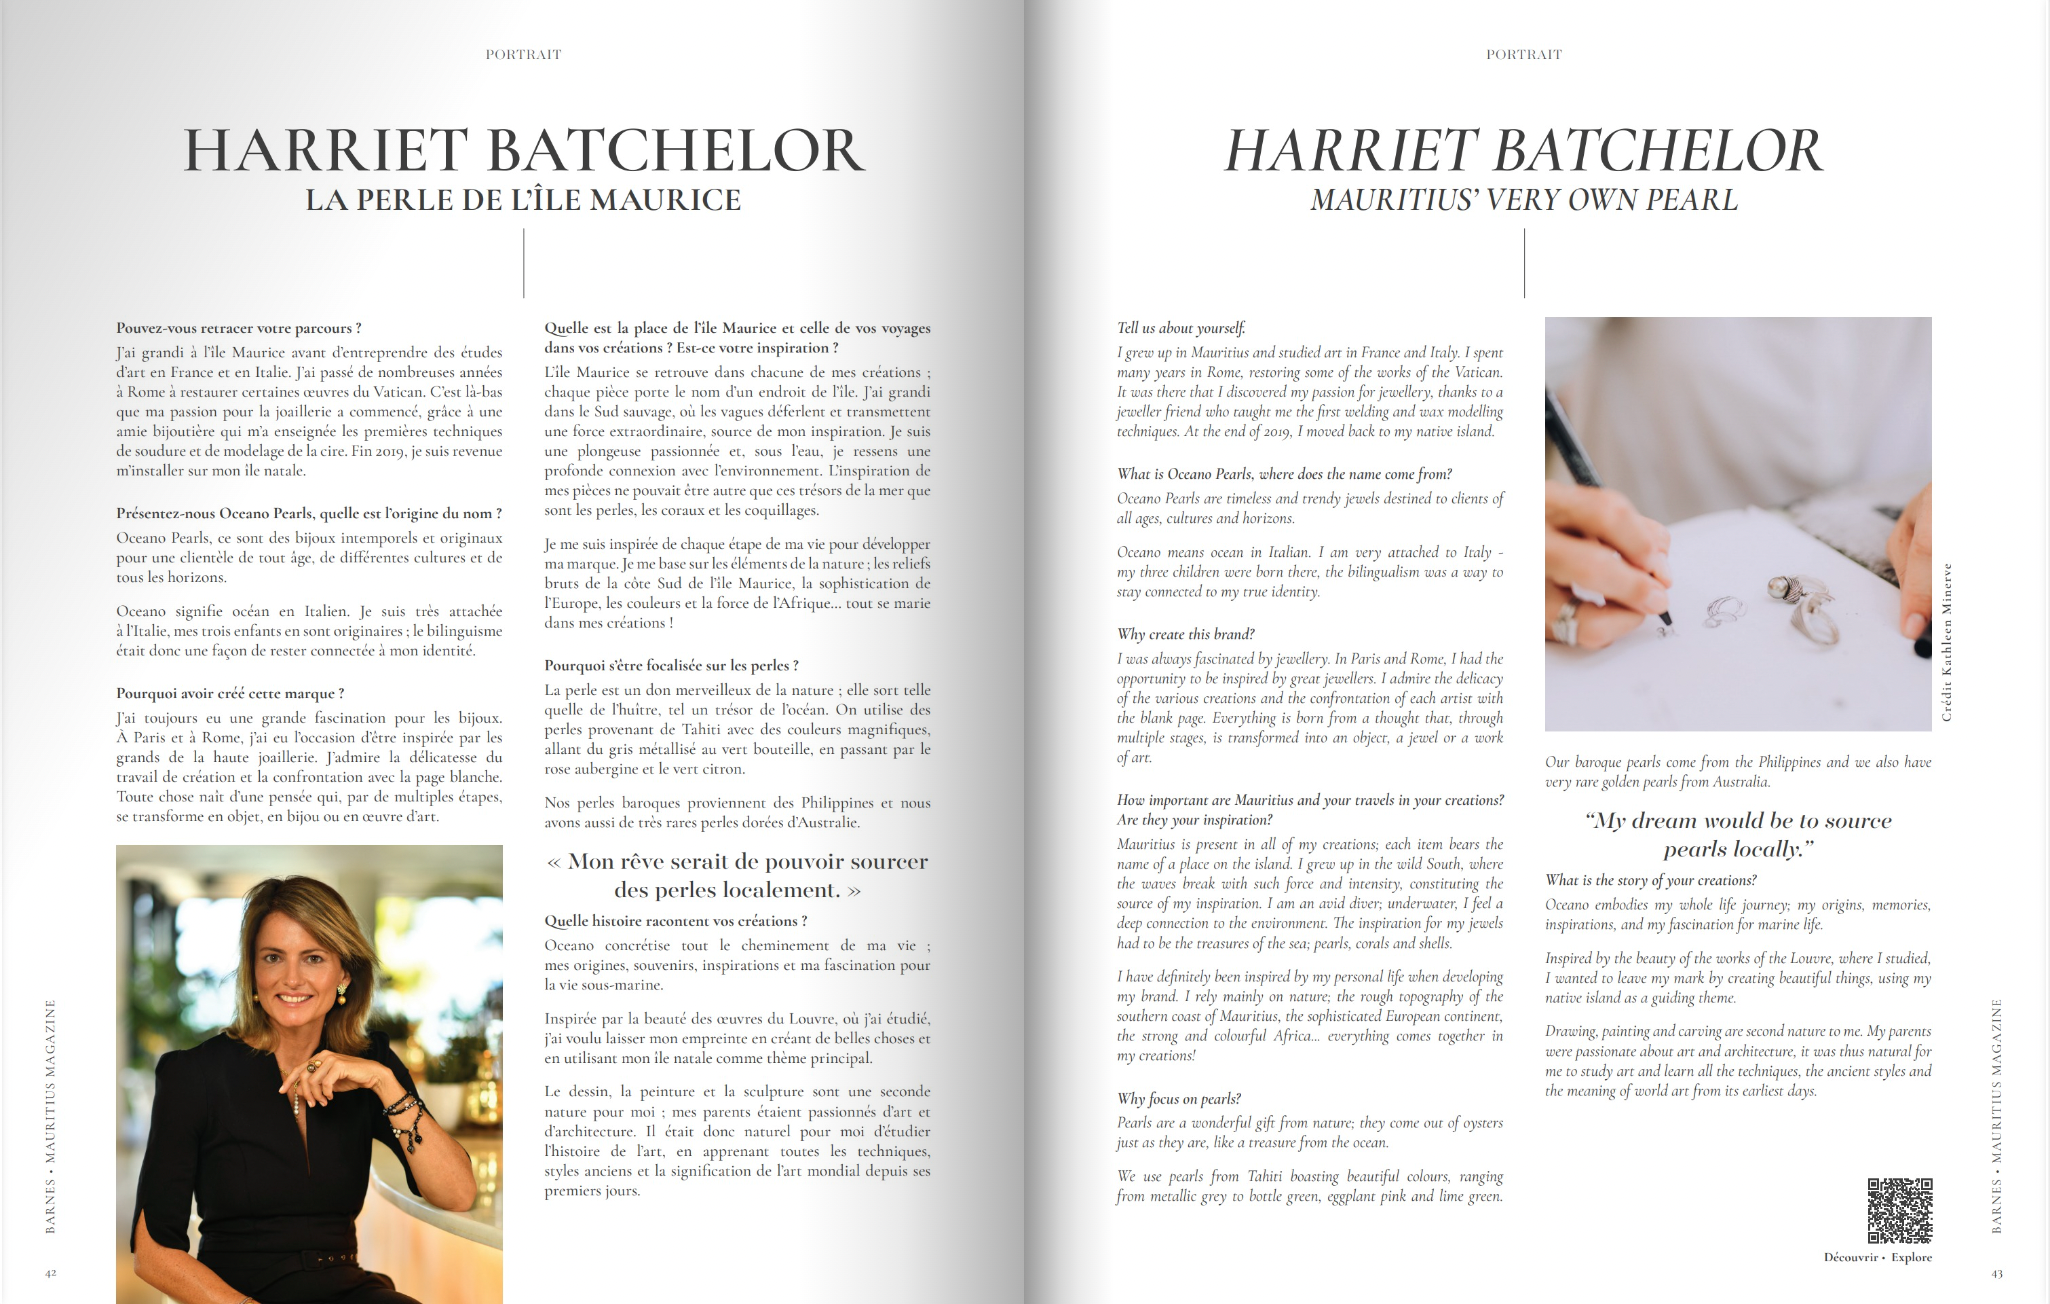 Barnes Mauritius - Harriet Batchelor, Mauritius' very own pearl - Oceano Pearls